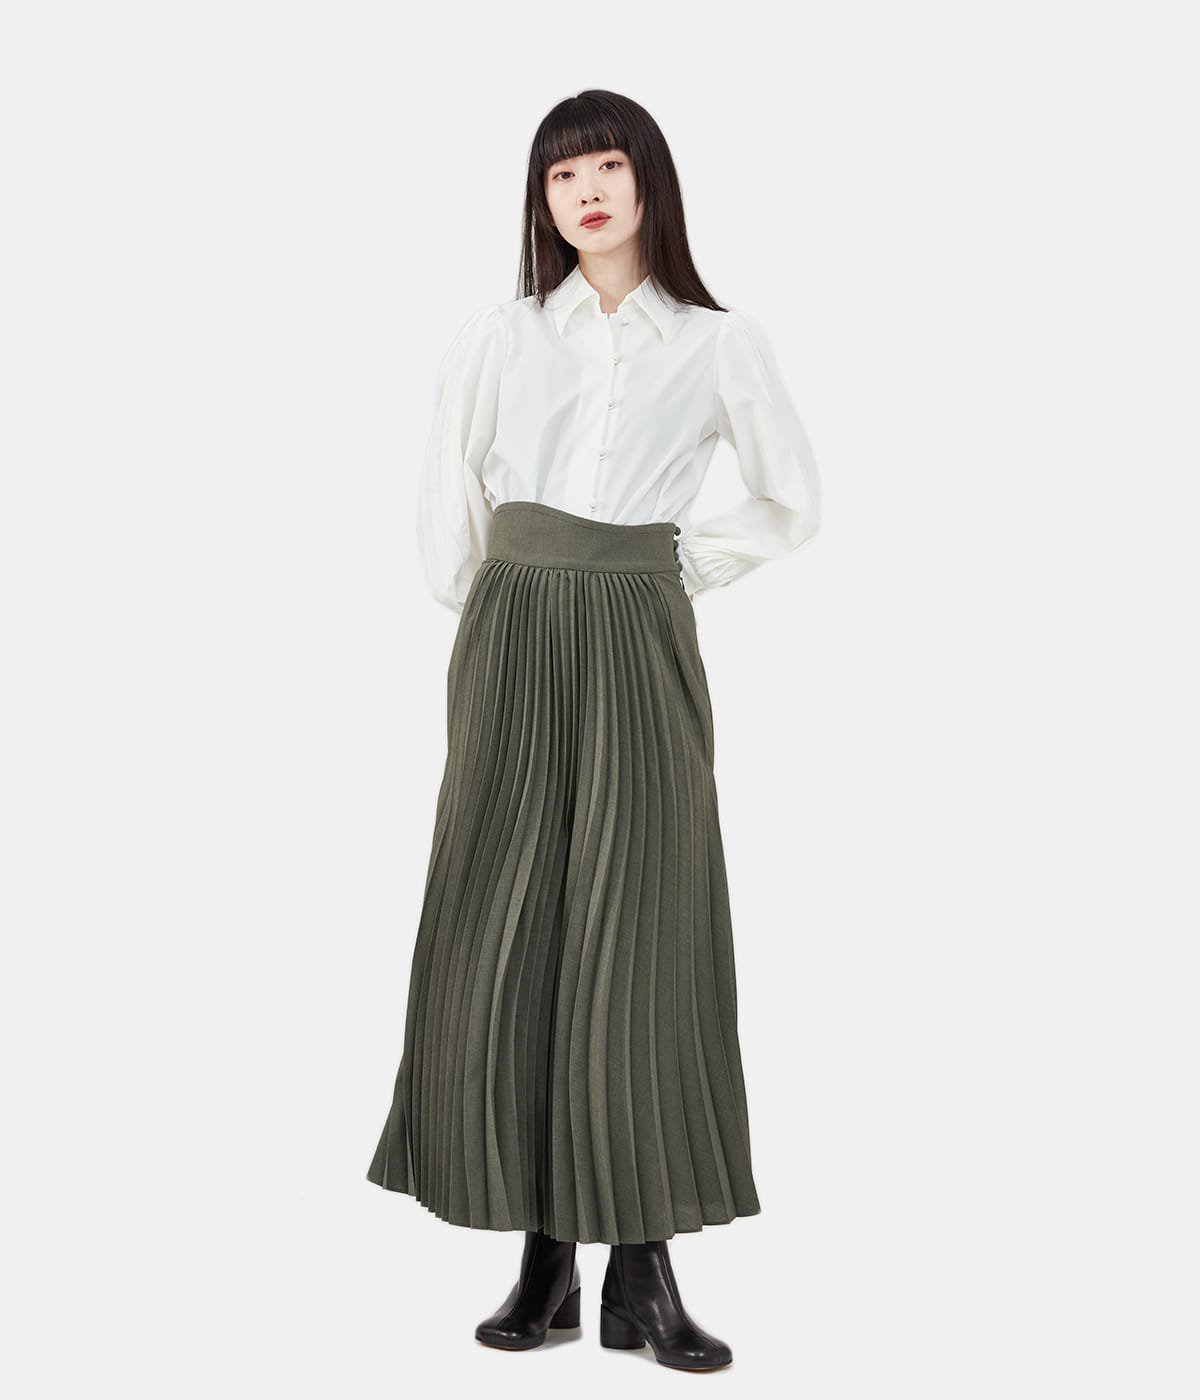 Mame KurogouchiマメCurved Pleated Skirt - ロングスカート